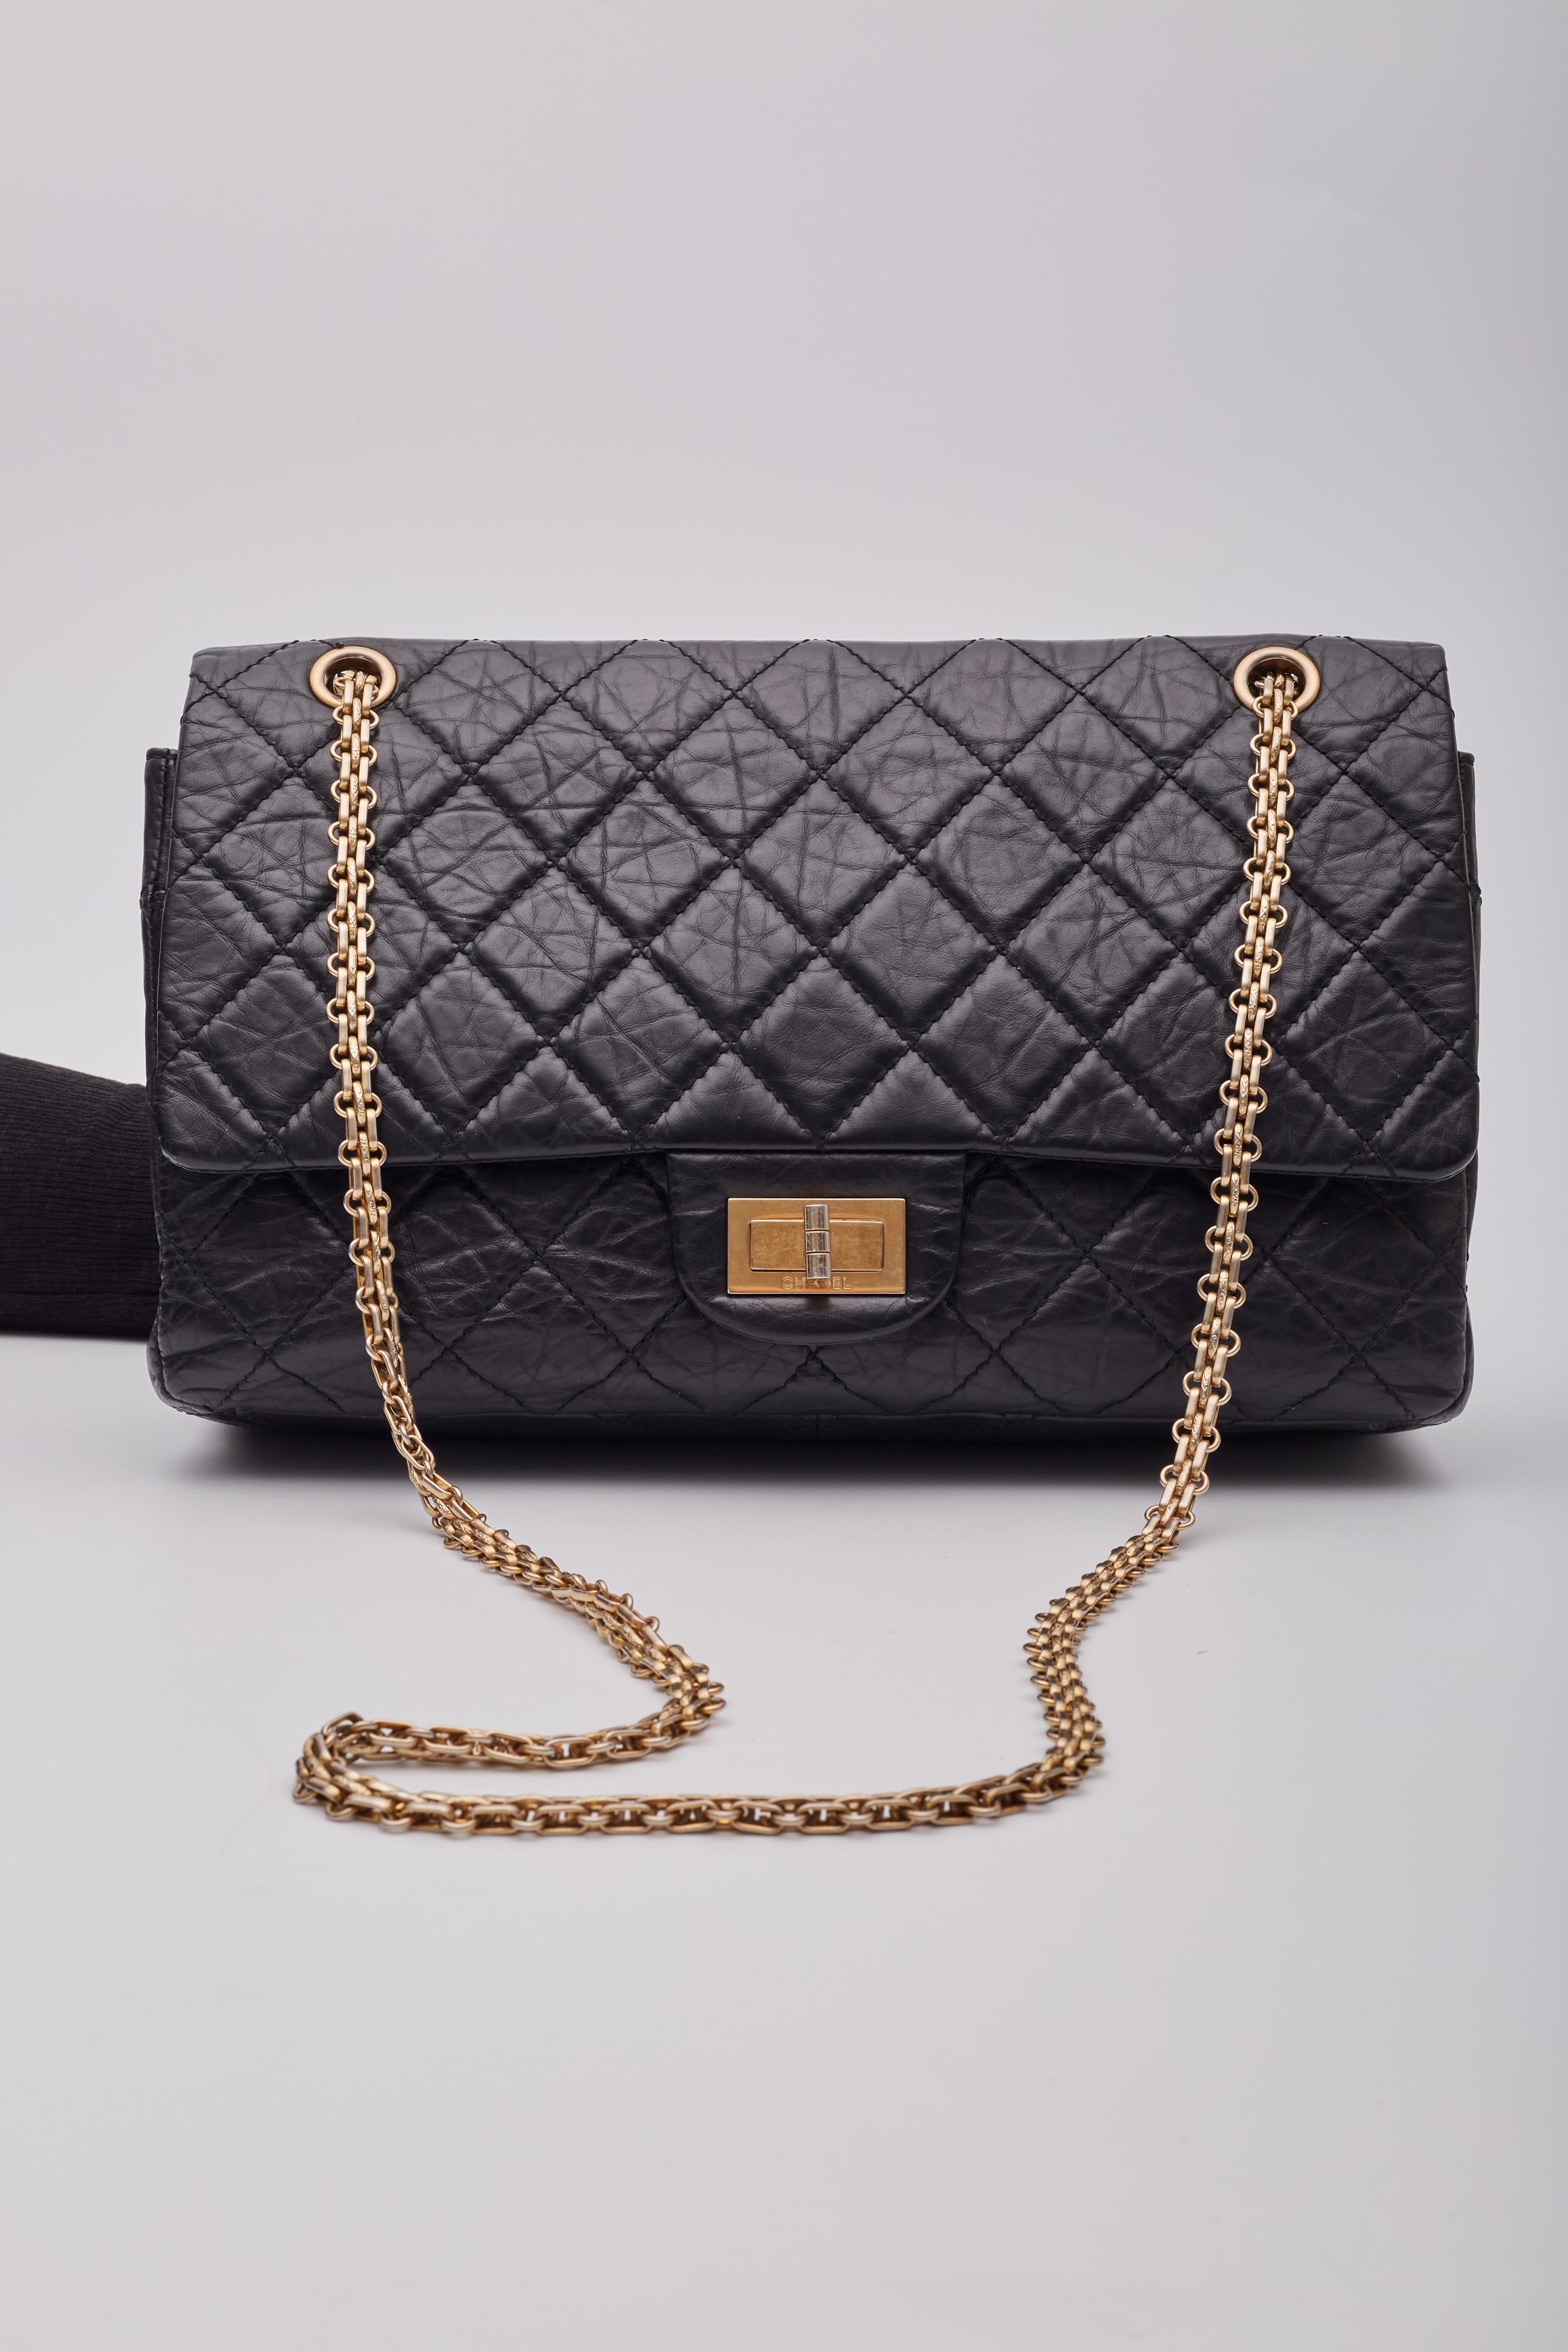 Chanel Calfskin Black Reissue 2.55 227 Flap Bag For Sale 1